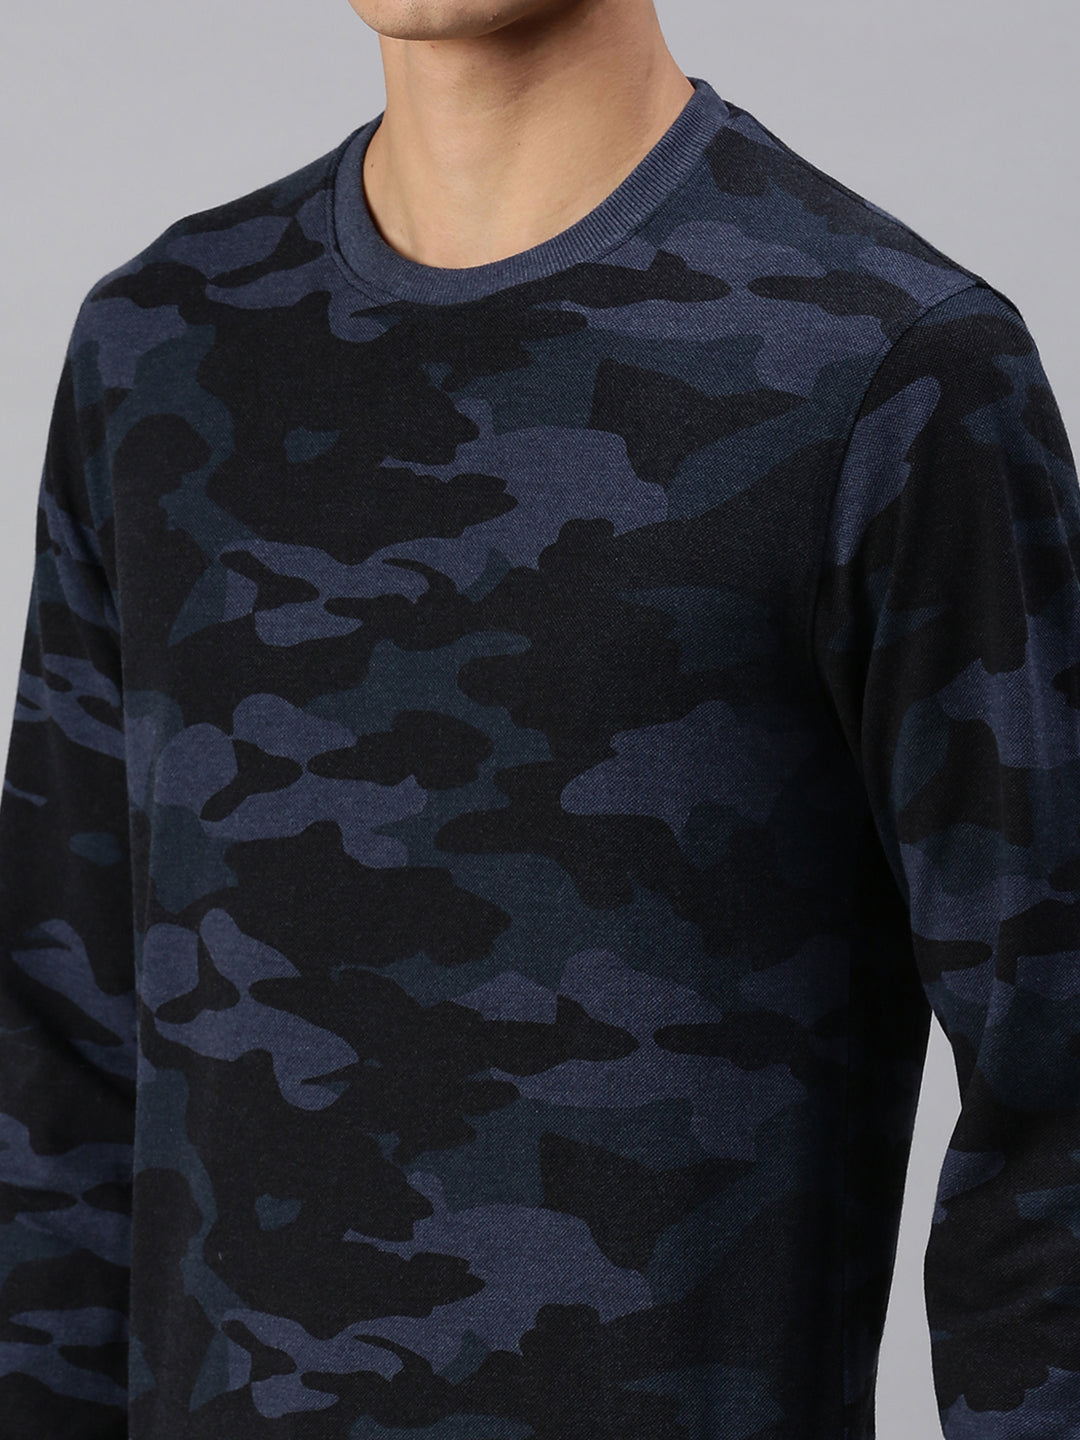 Men Camouflage Navy Blue Sweatshirt